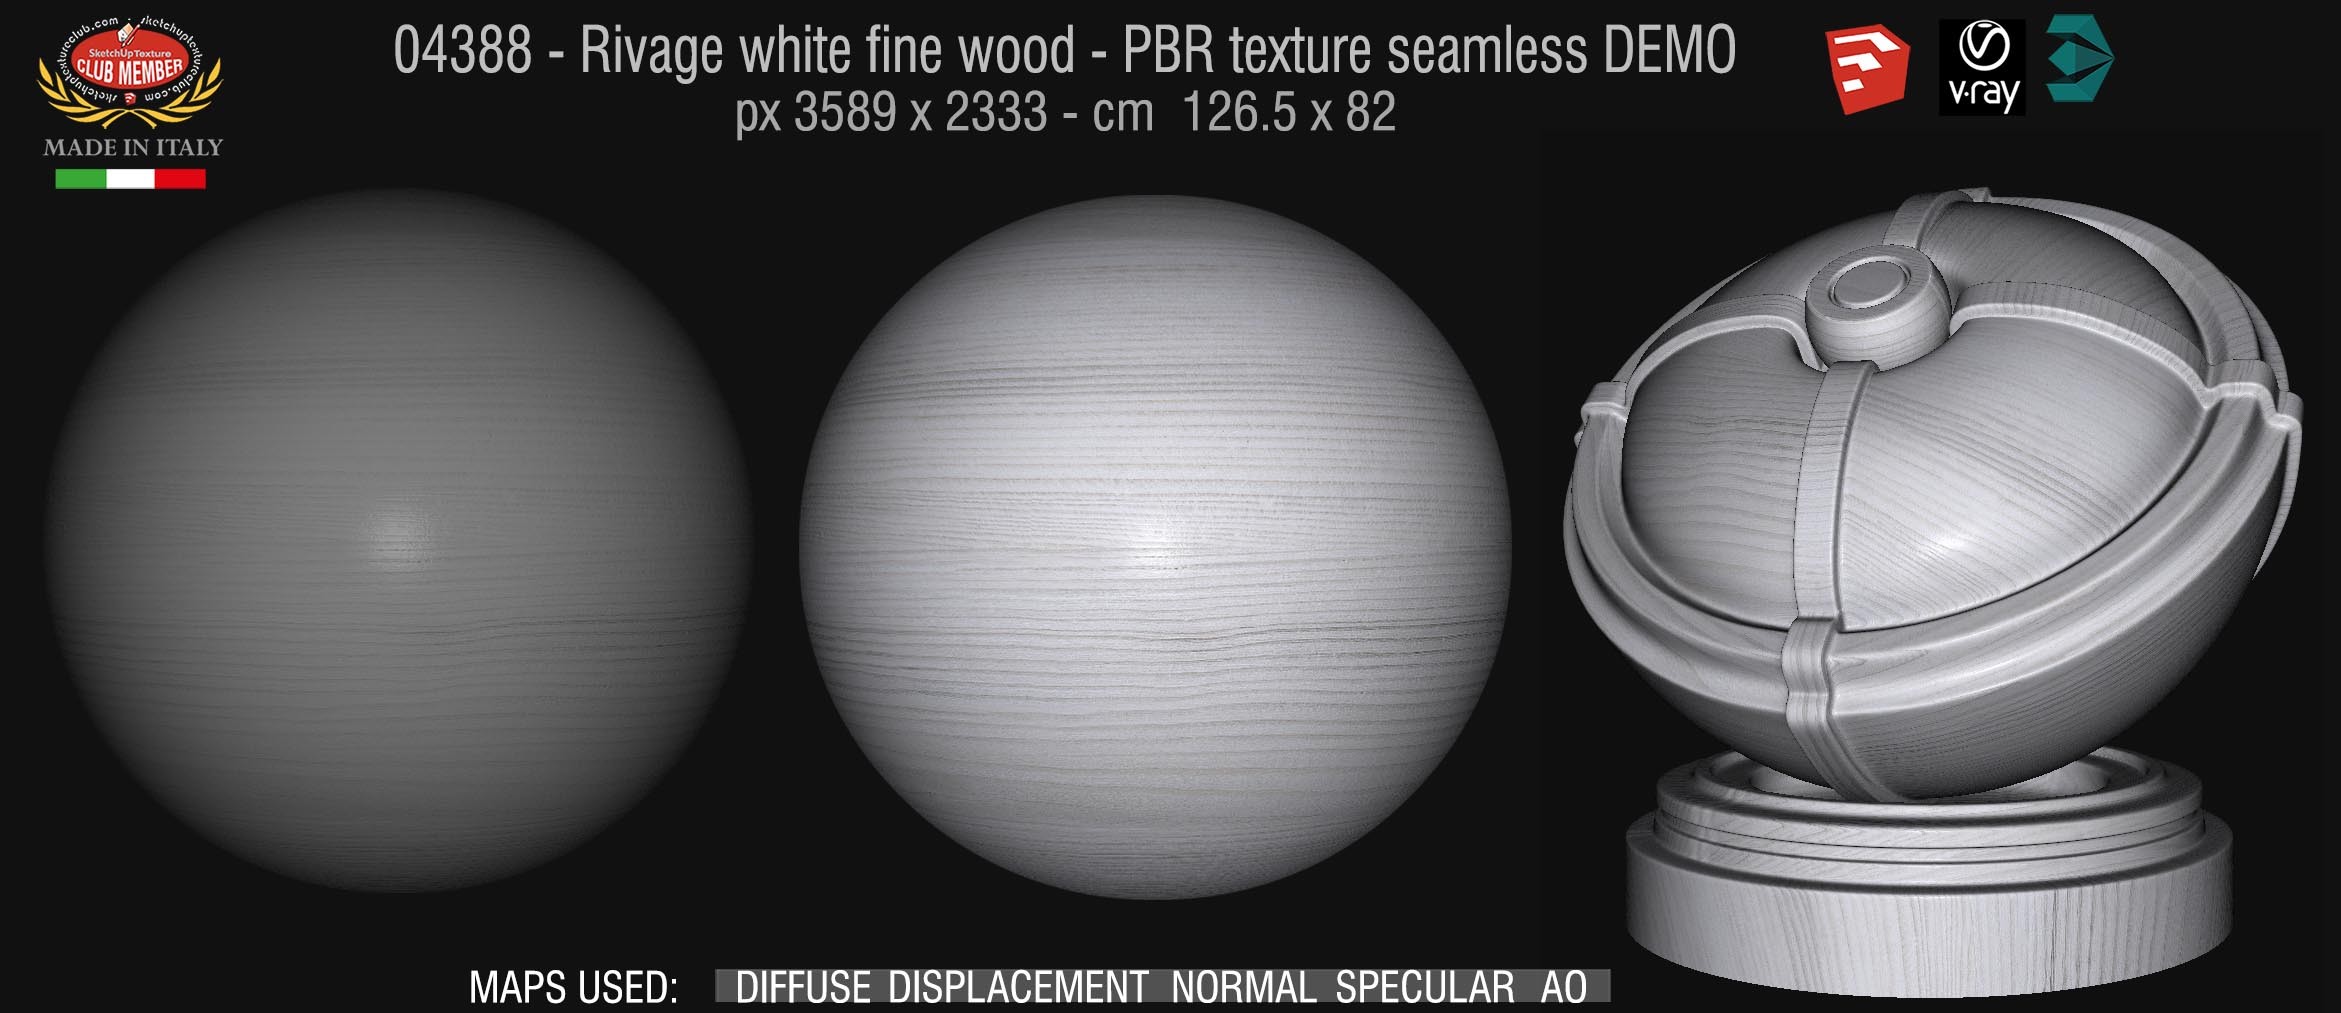 04388 Rivage white fine wood - PBR texture seamless DEMO